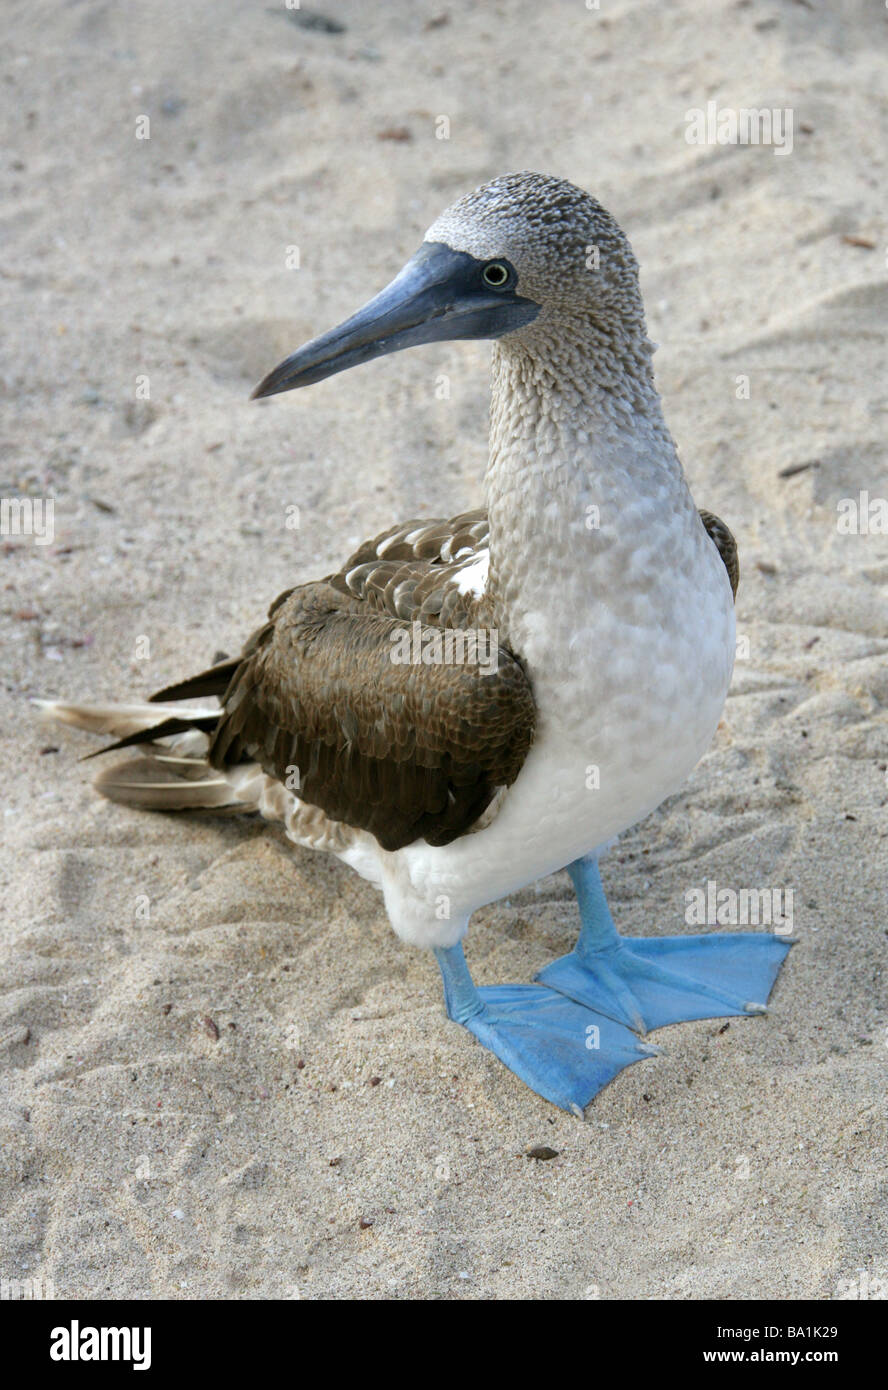 Blue-footed Booby, Sula nebouxii, Sulidae, Espanola Island, Galapagos Archipelago, Ecuador, South America Stock Photo